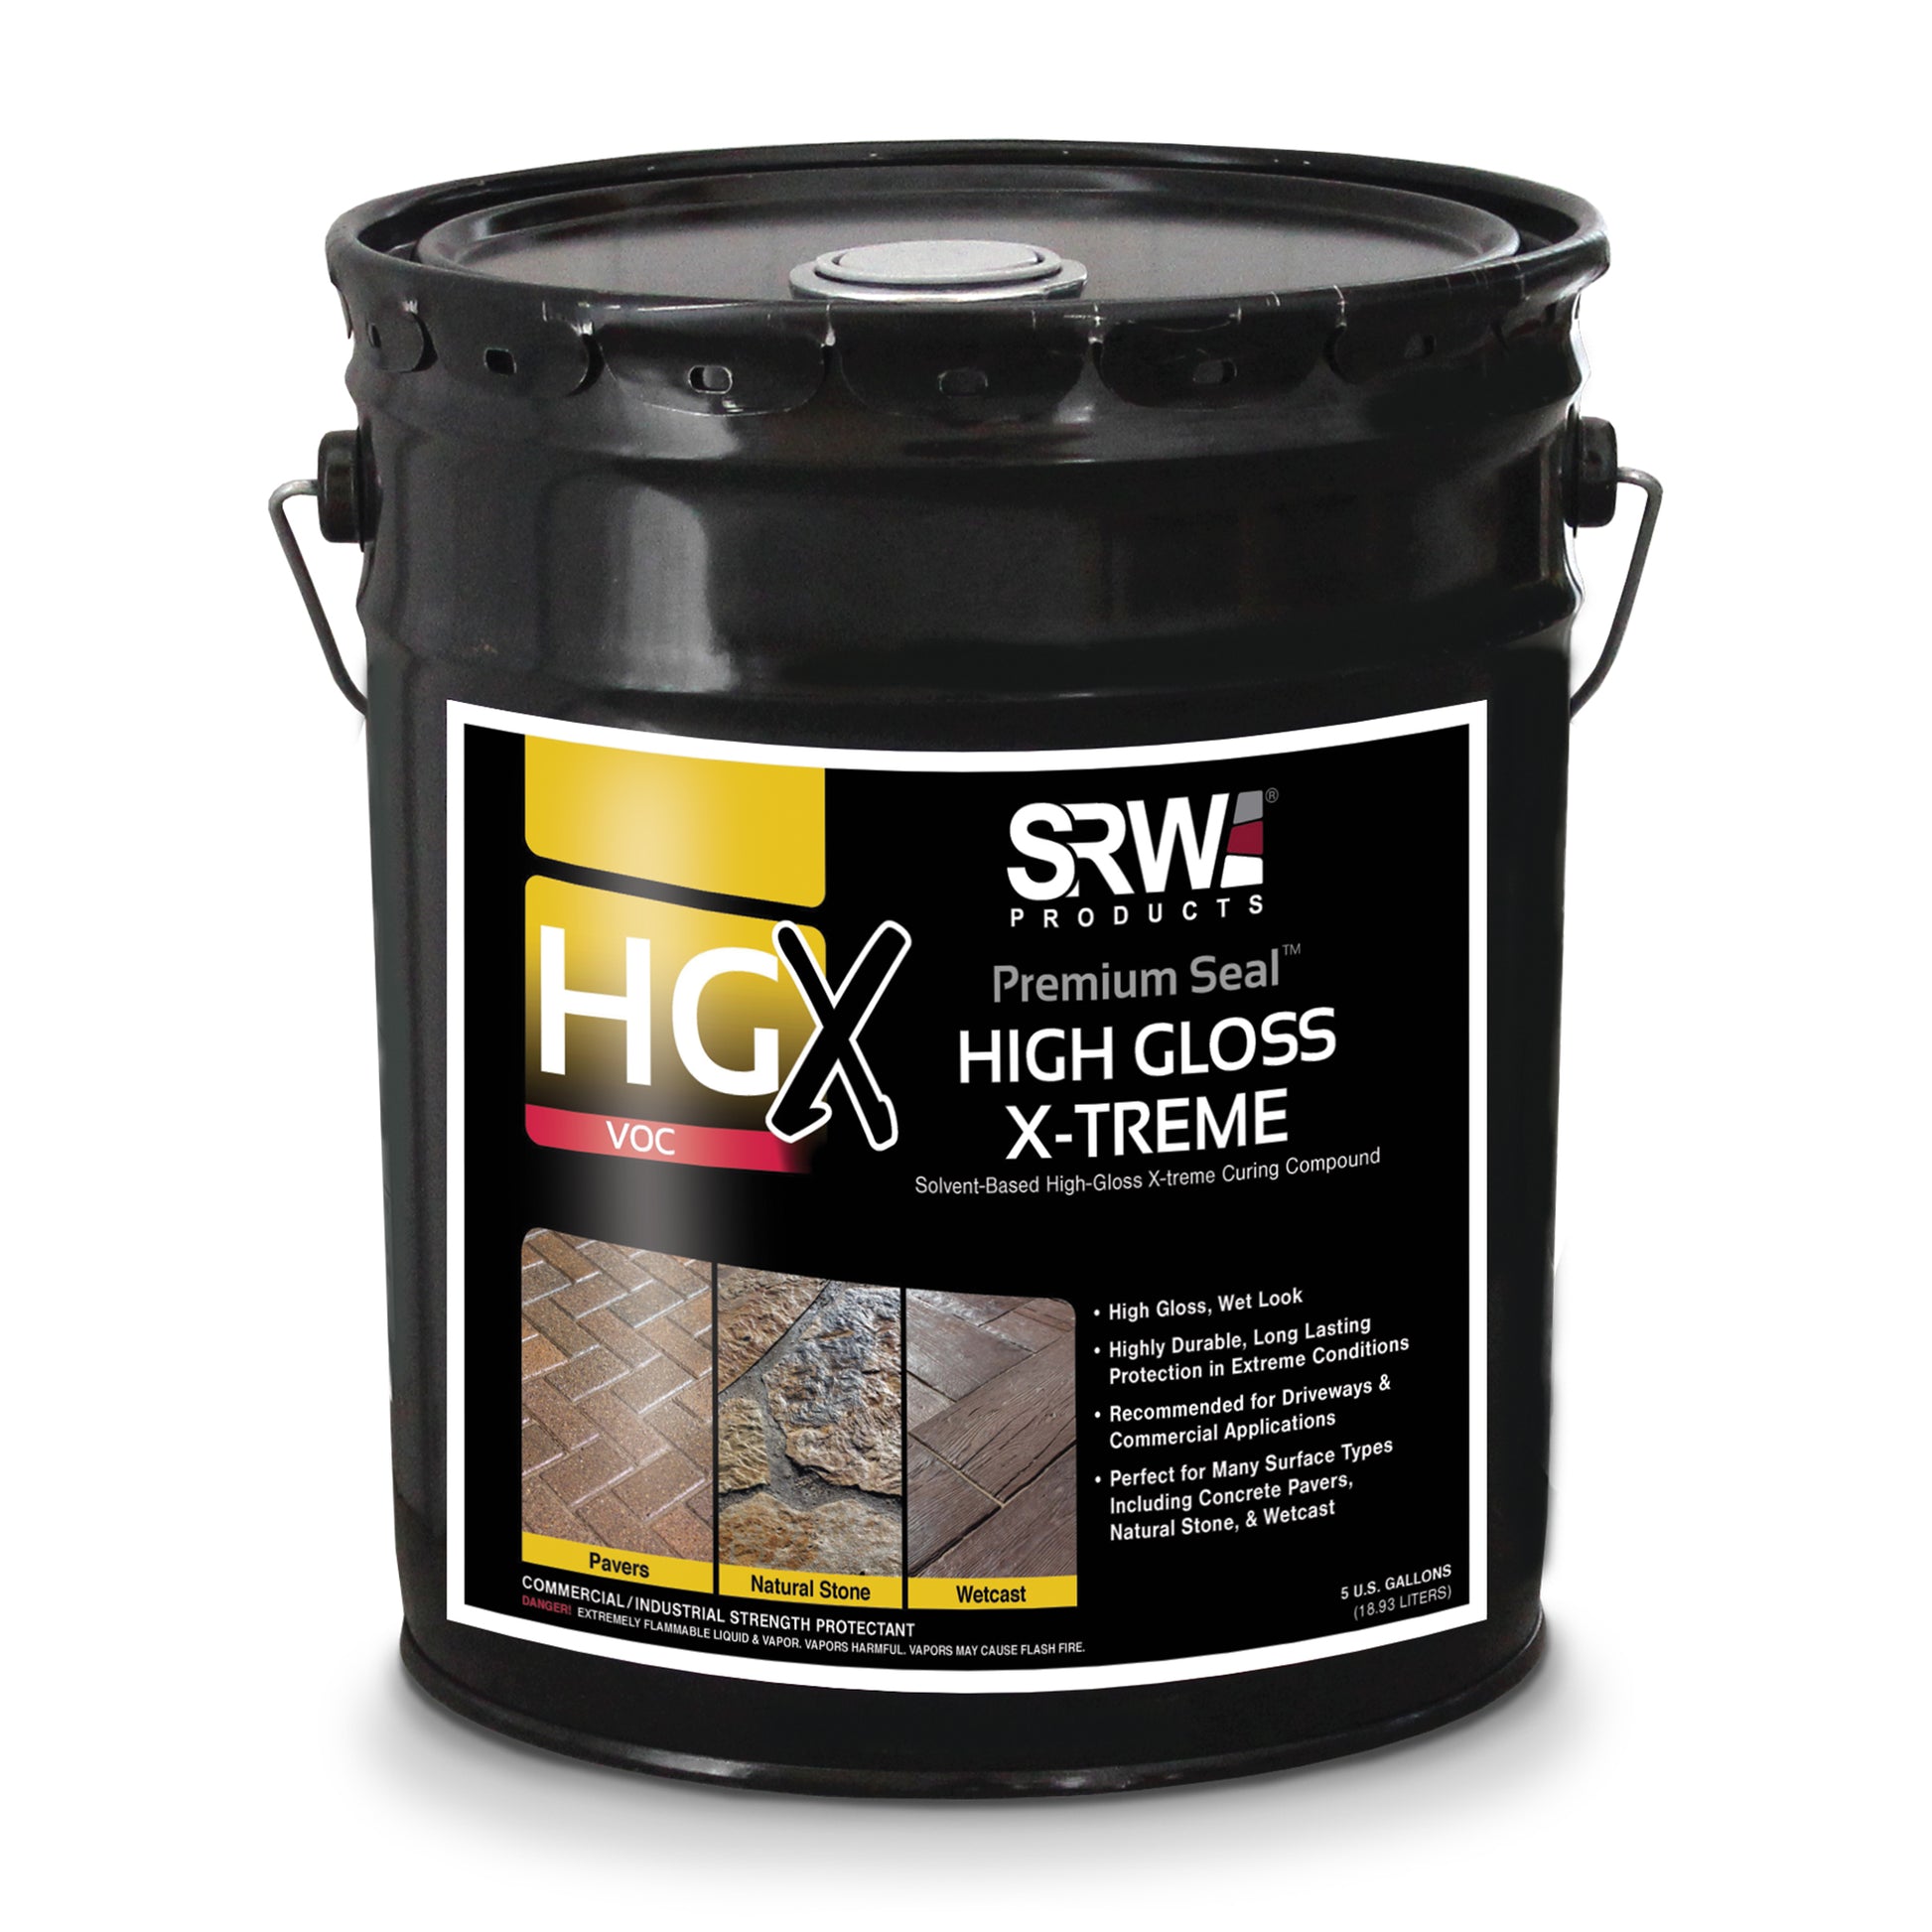 SRW Products HGX VOC High Gloss X-Treme - Premium Seal™